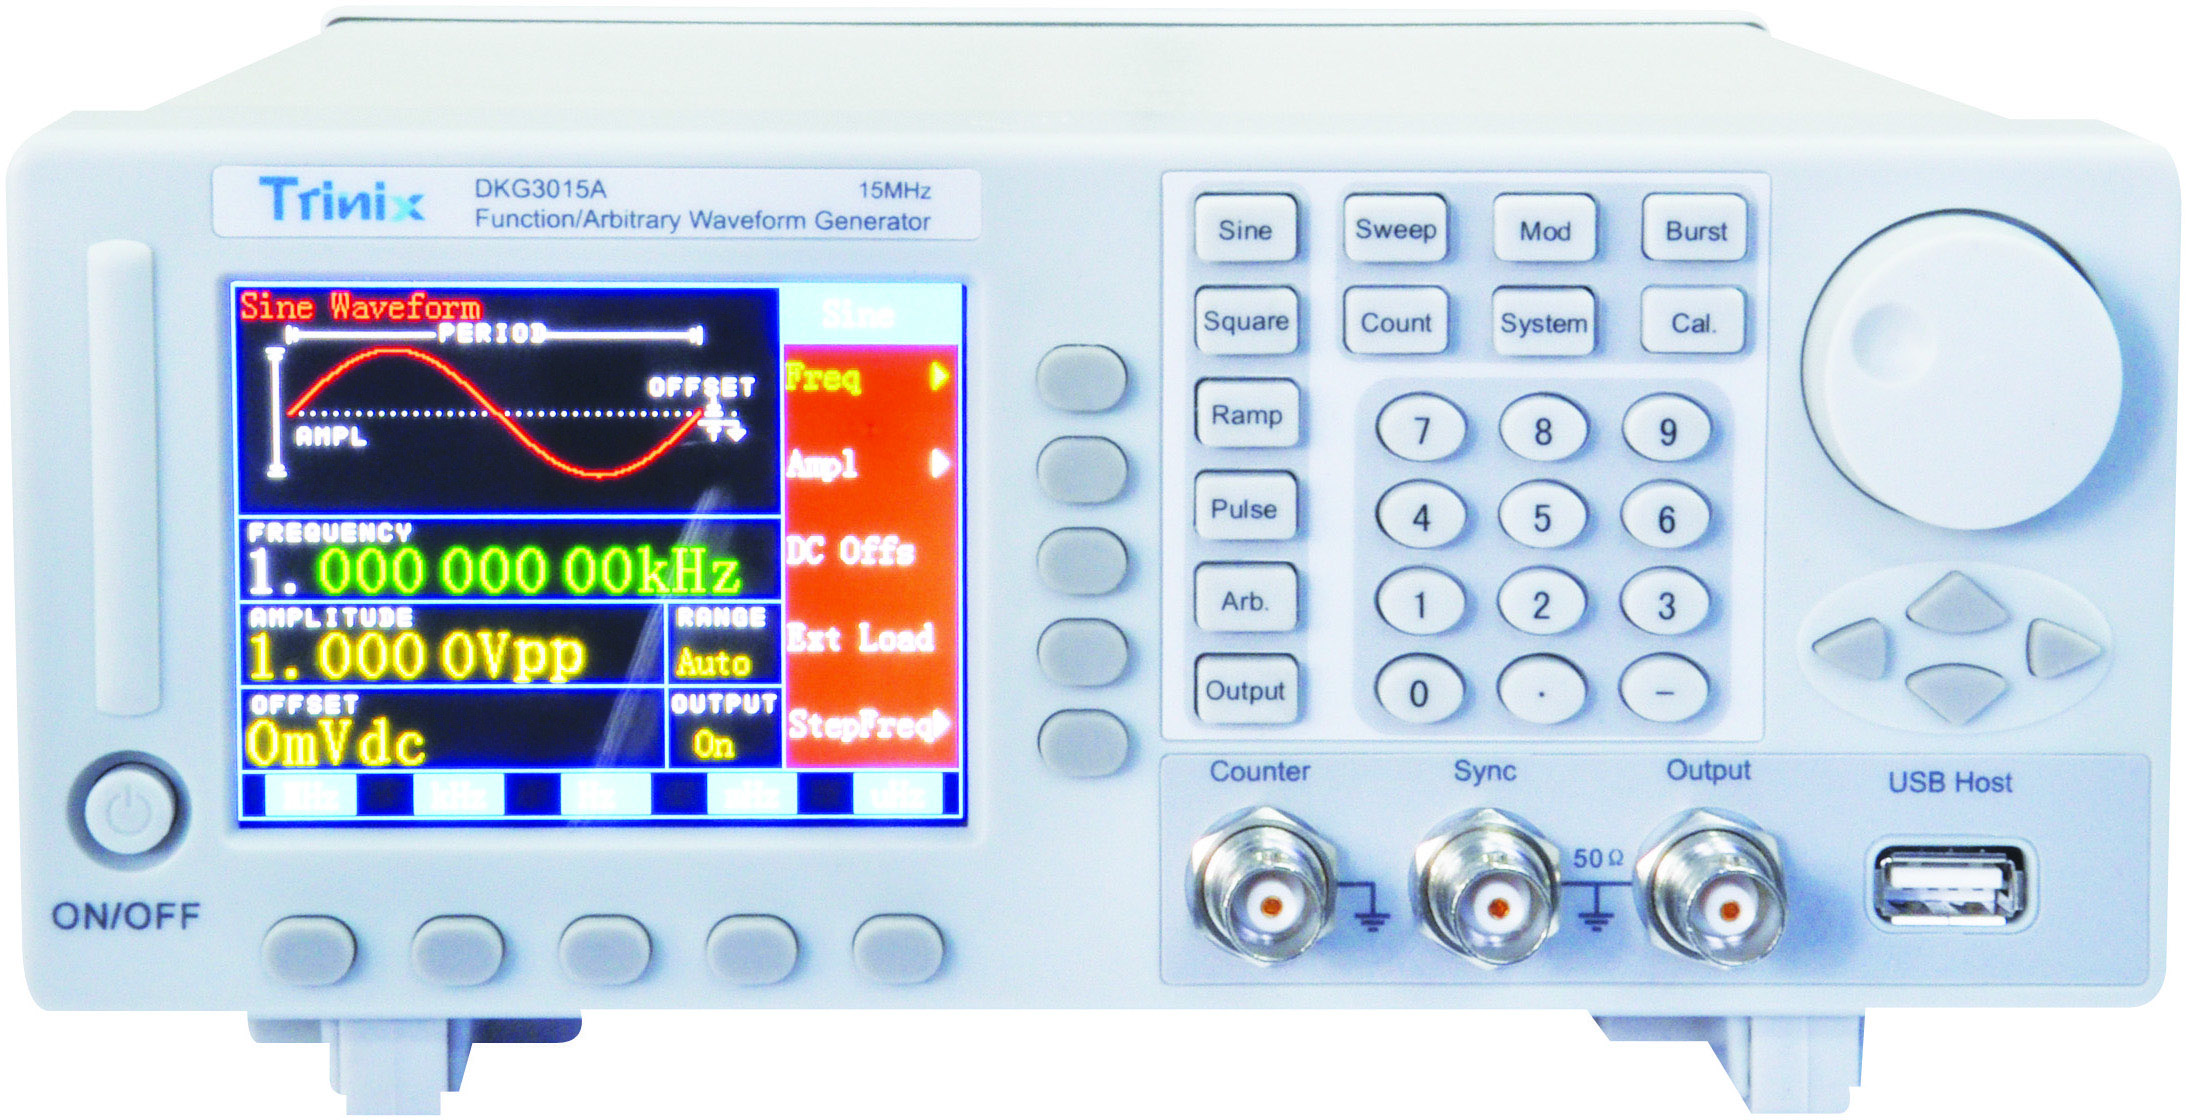 DKG-3015A Function/Arbitrary Waveform Generator